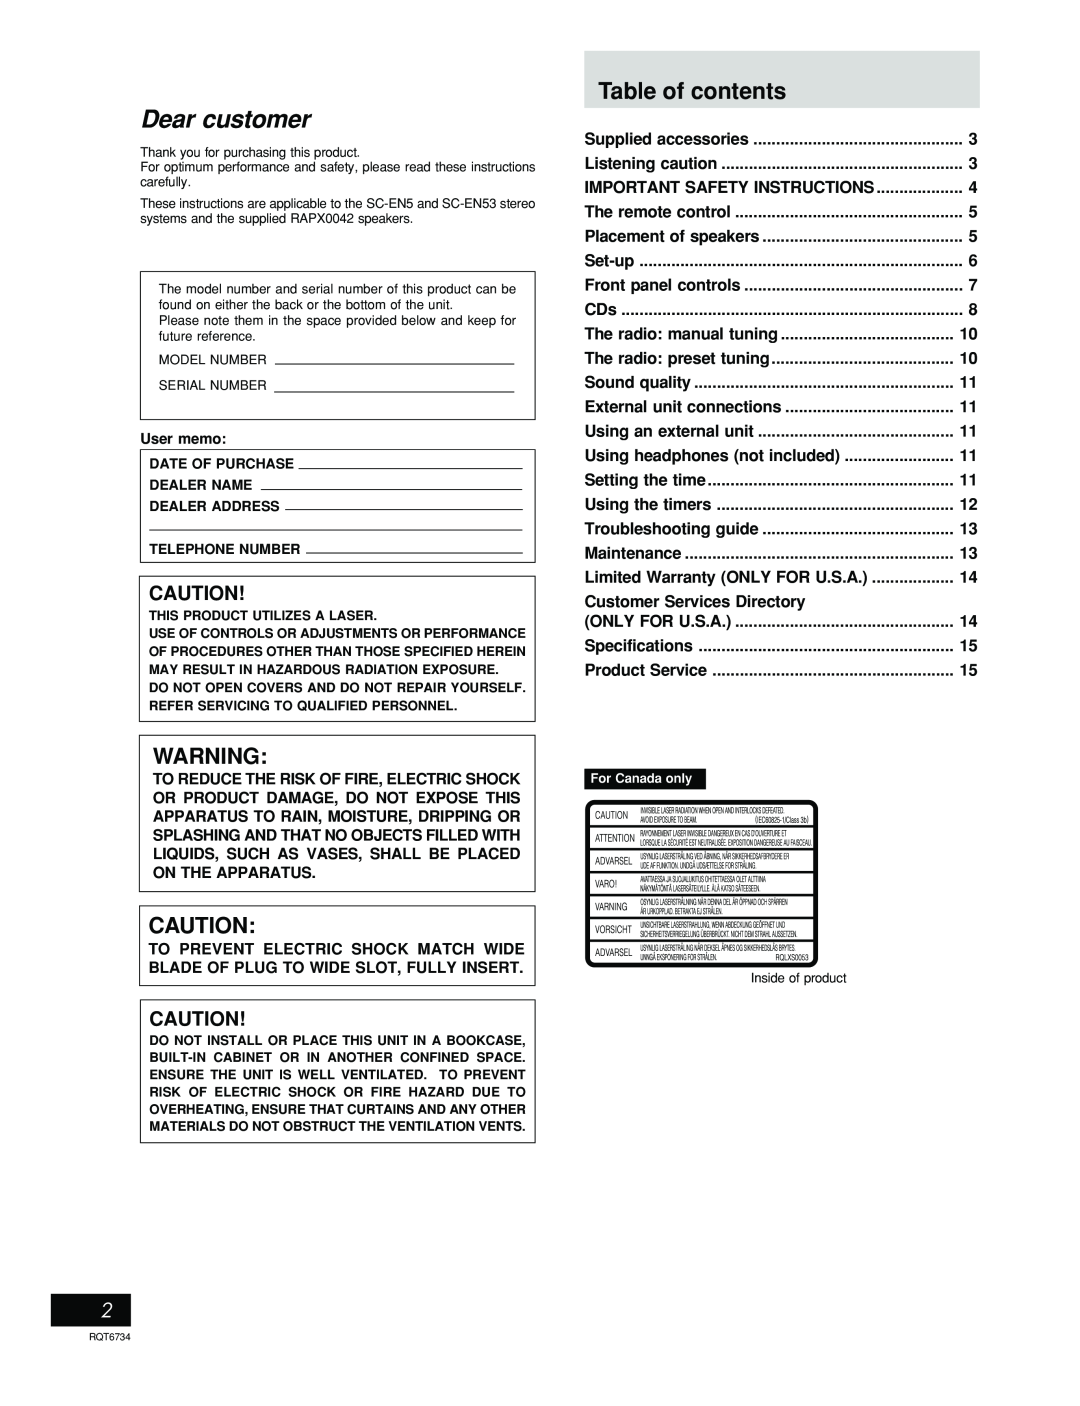 Panasonic SC-EN53 manual Table of contents 